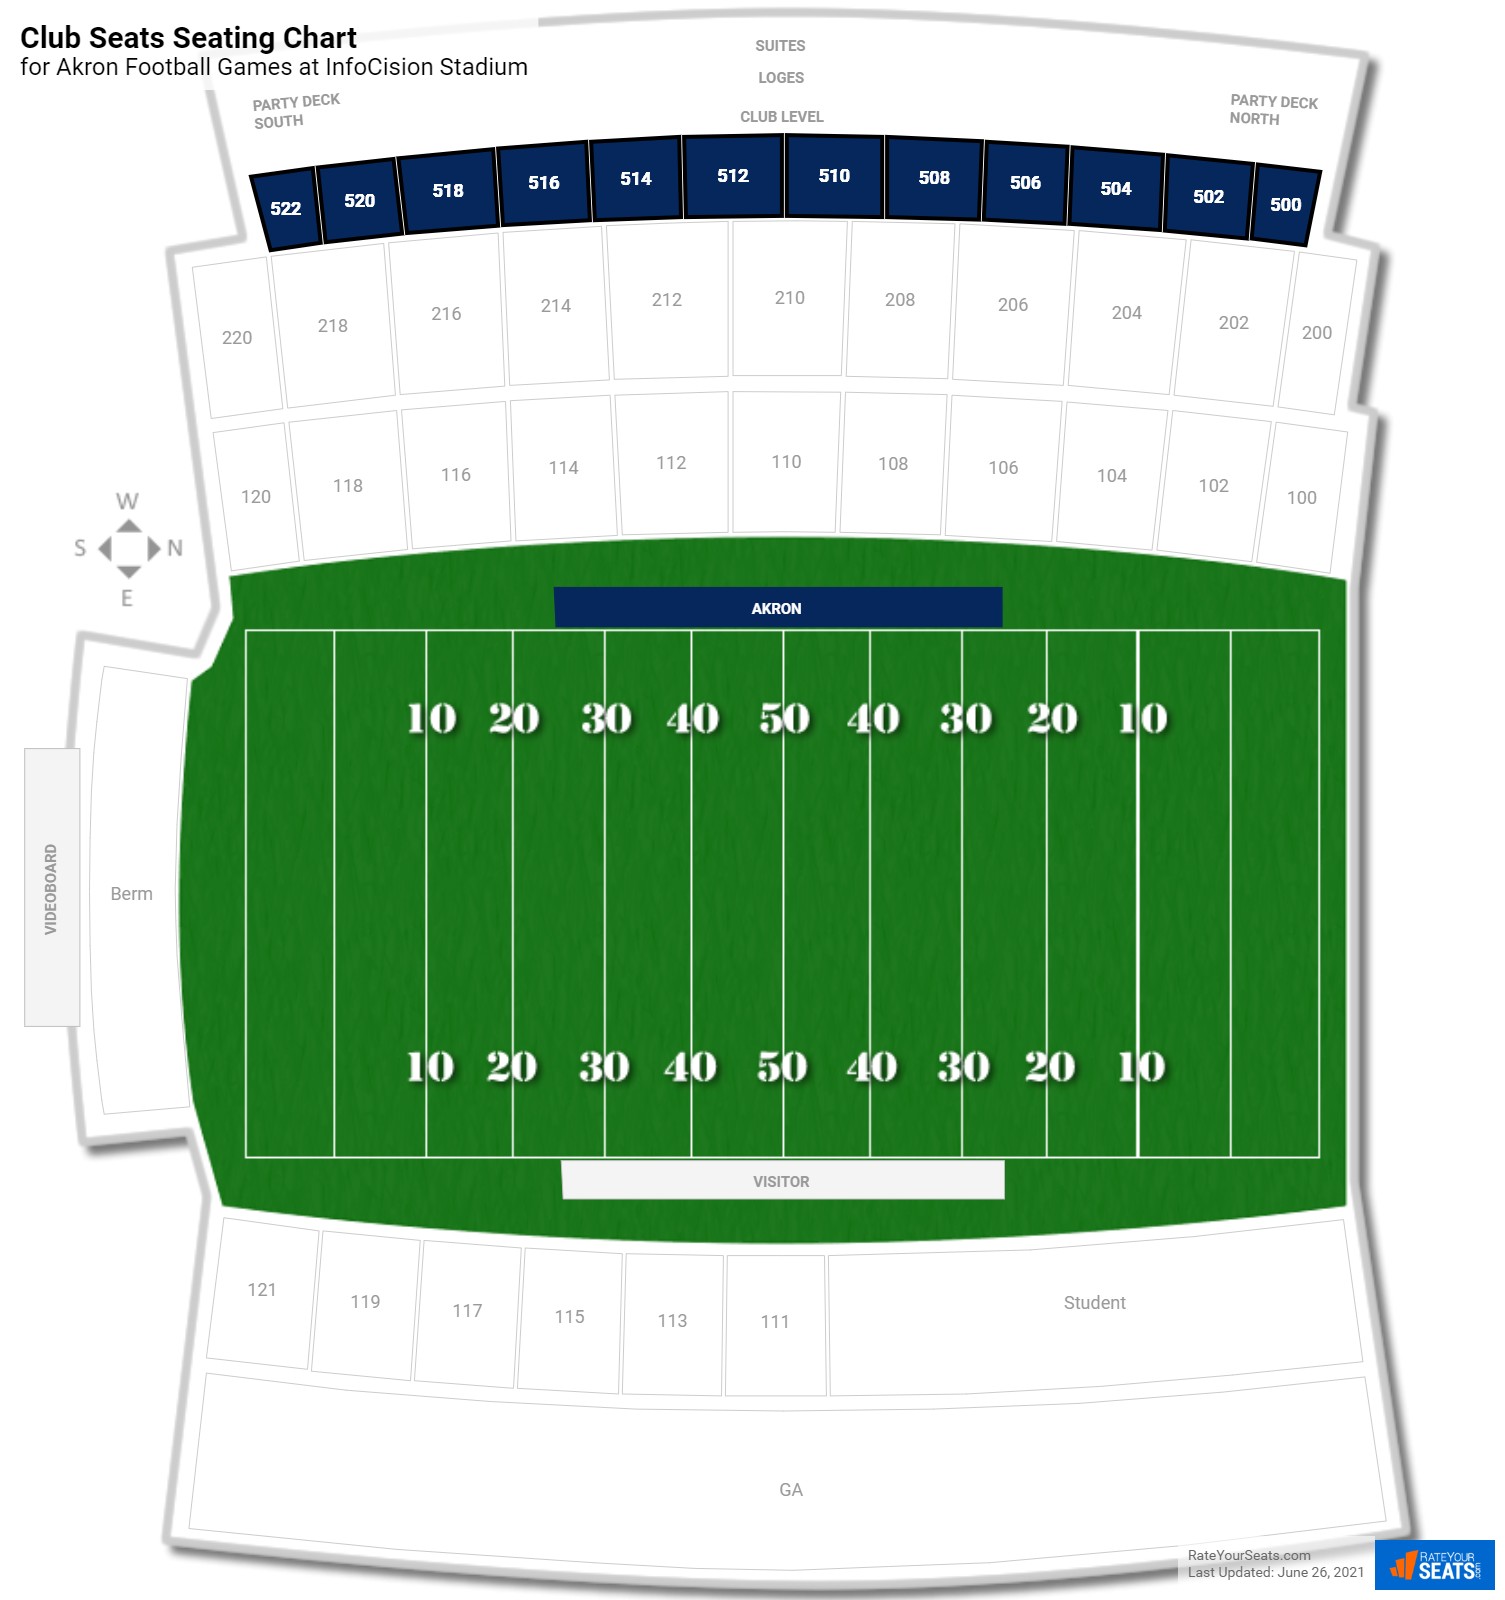 Akron Club Seats Seating Chart at InfoCision Stadium